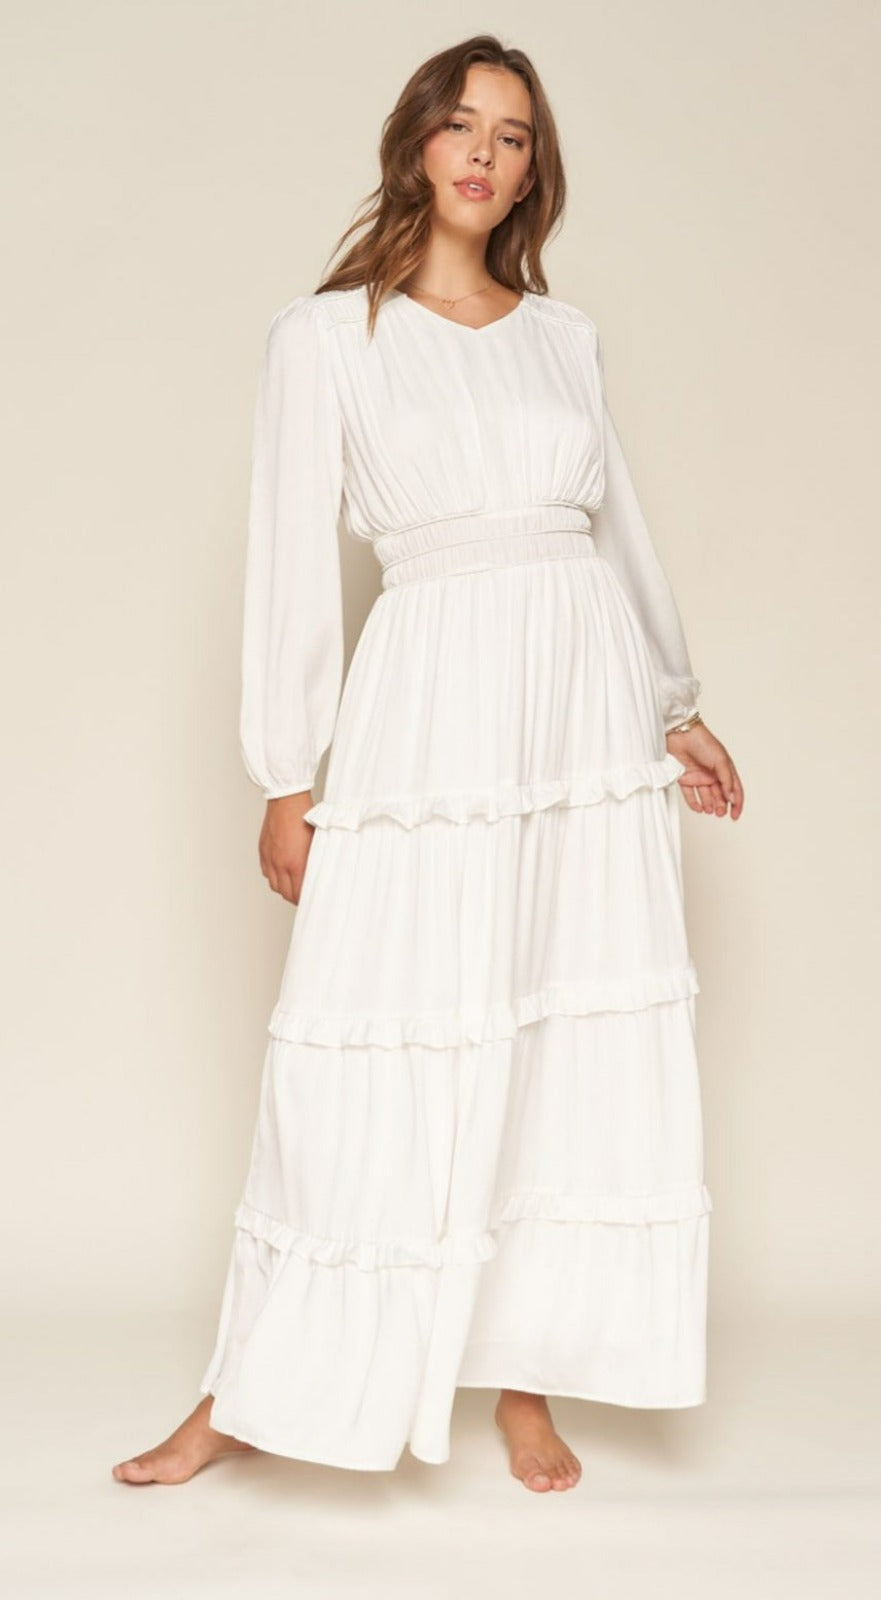 Cynthia White Temple / Wedding Dress – WhiteTempleDresses